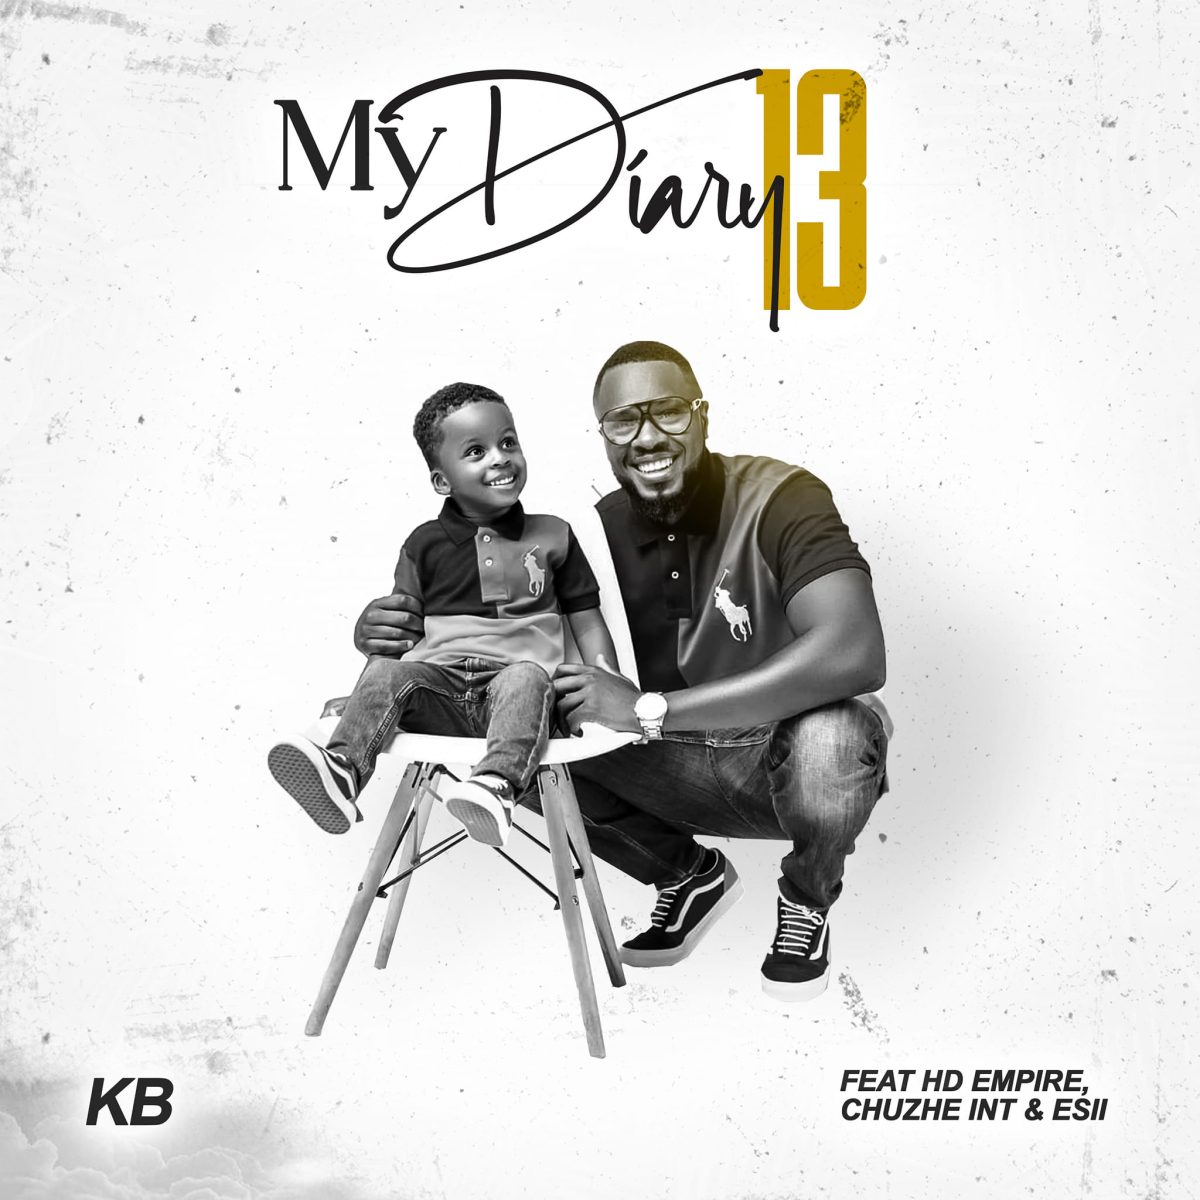 KB ft. HD Empire, Chuzhe Int & Esii - My Diary 13